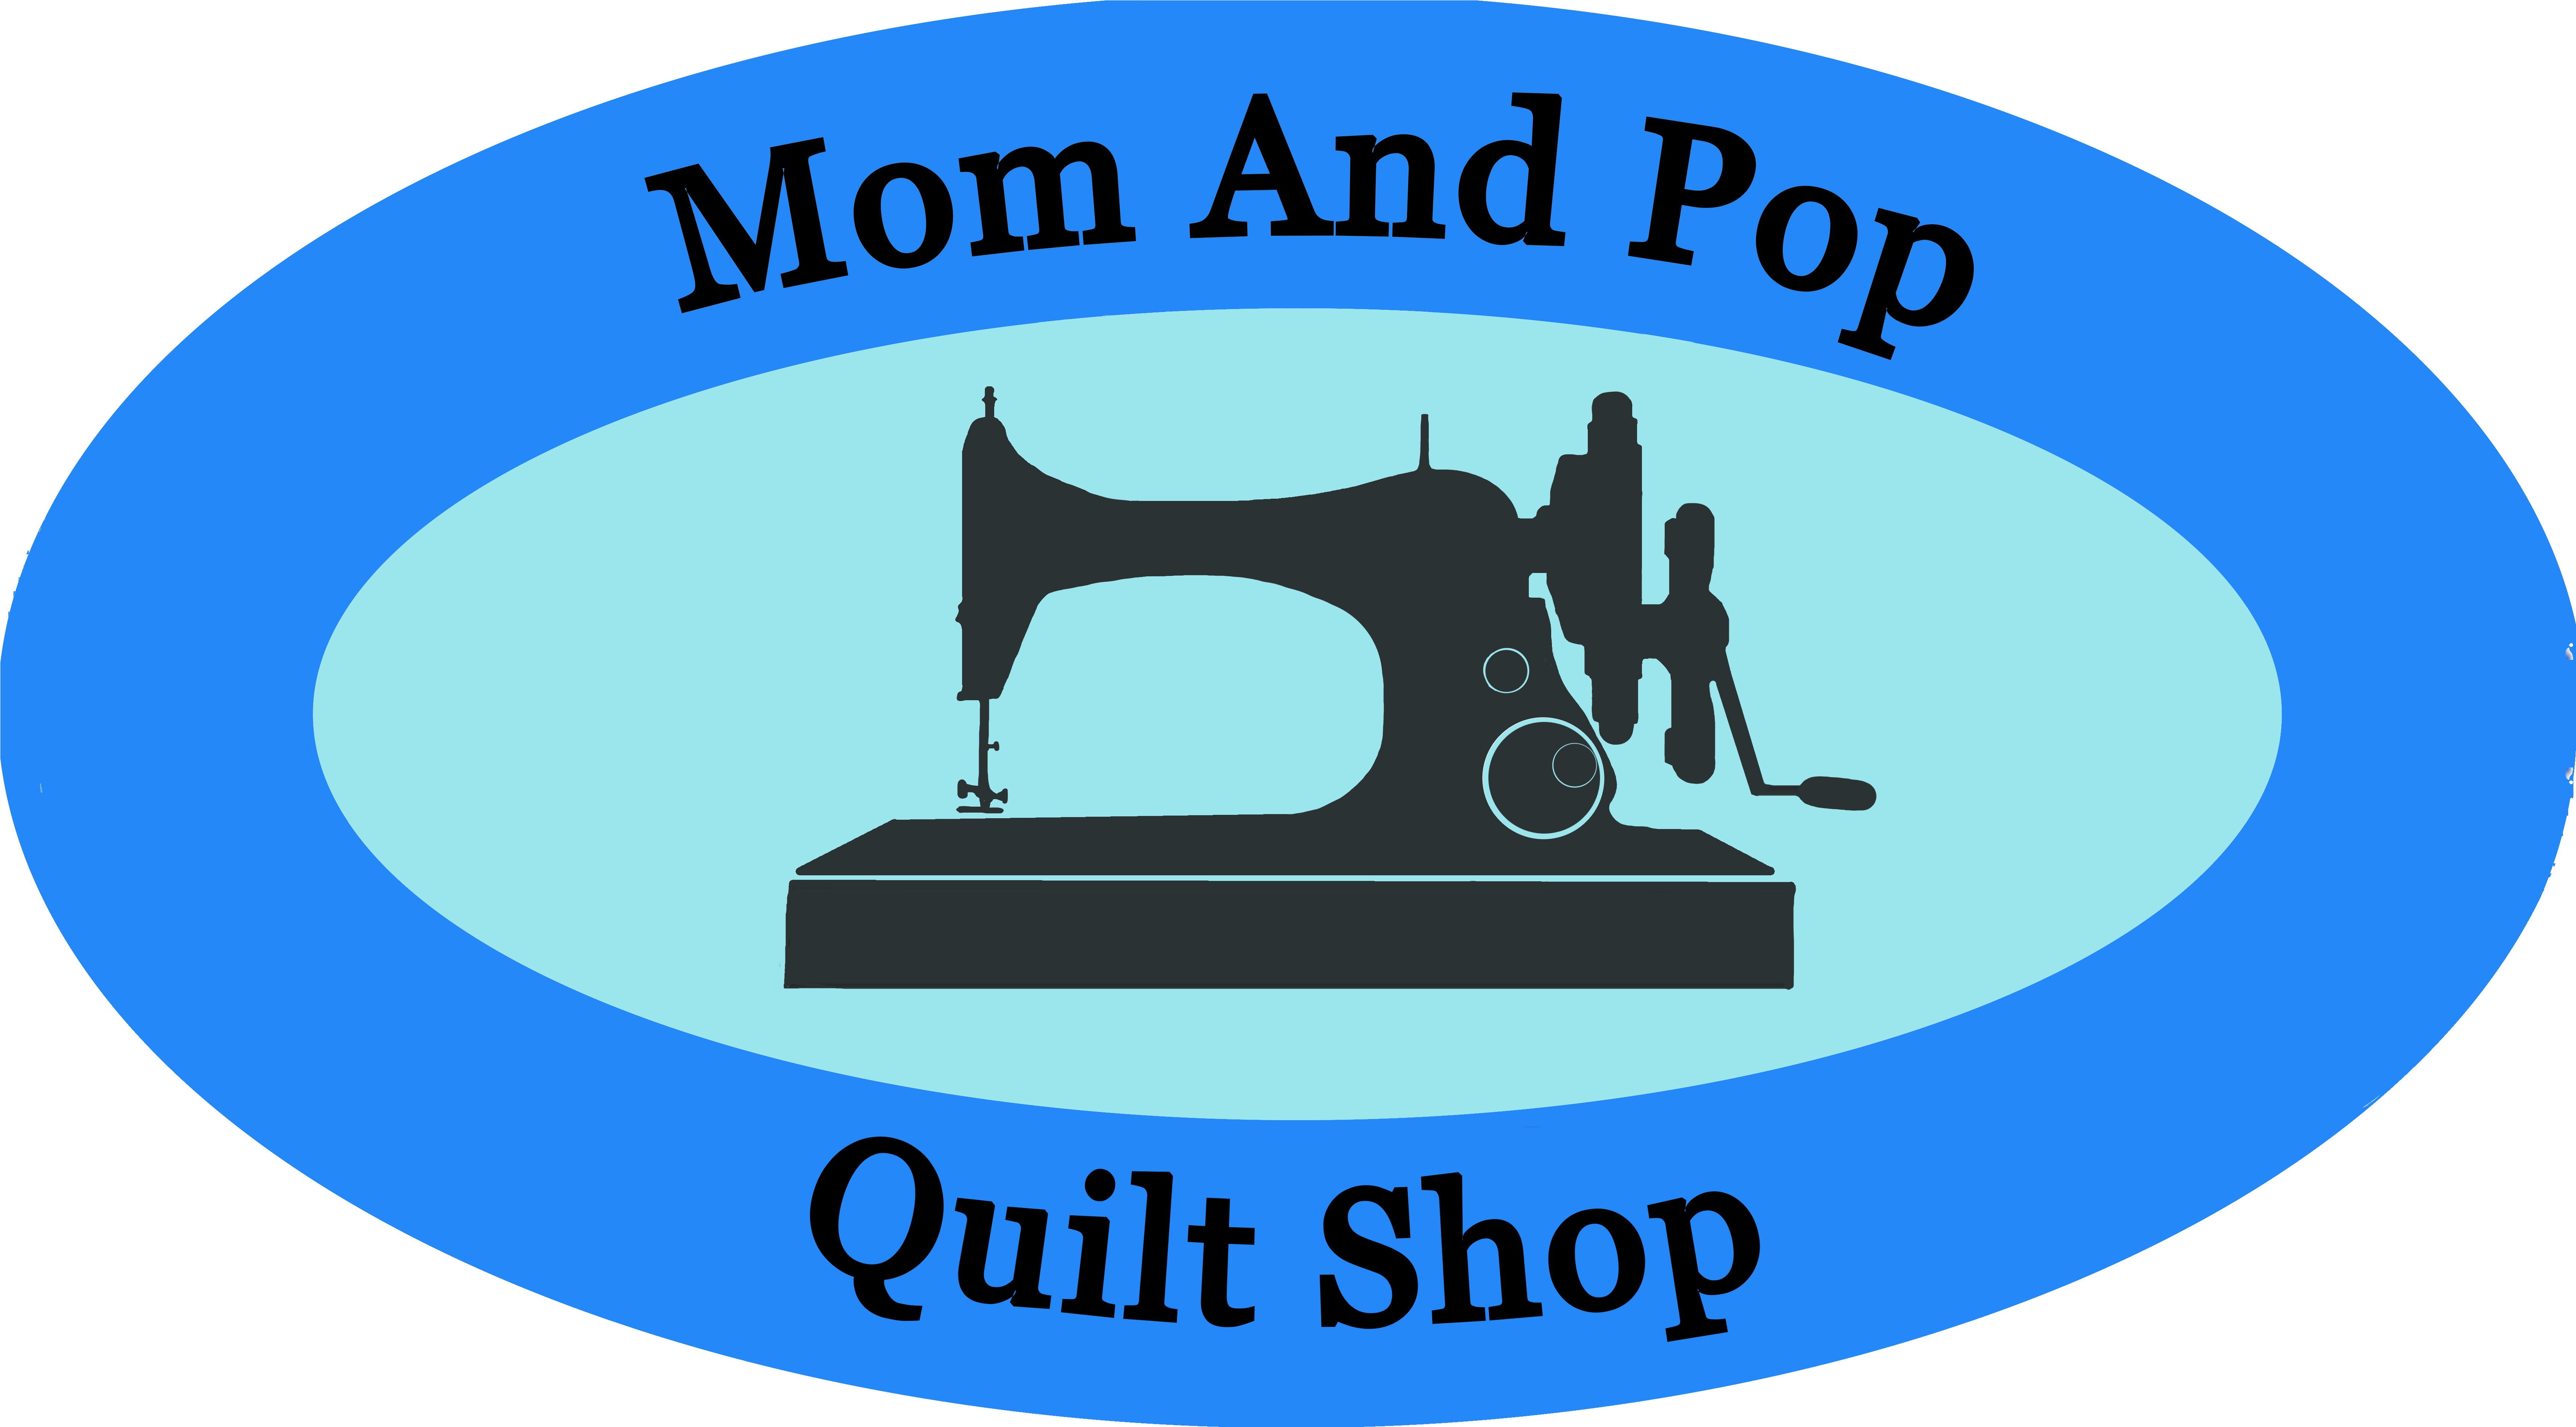 Mom And Pop Quilt Shop - Quilt Shop (6899x5644)